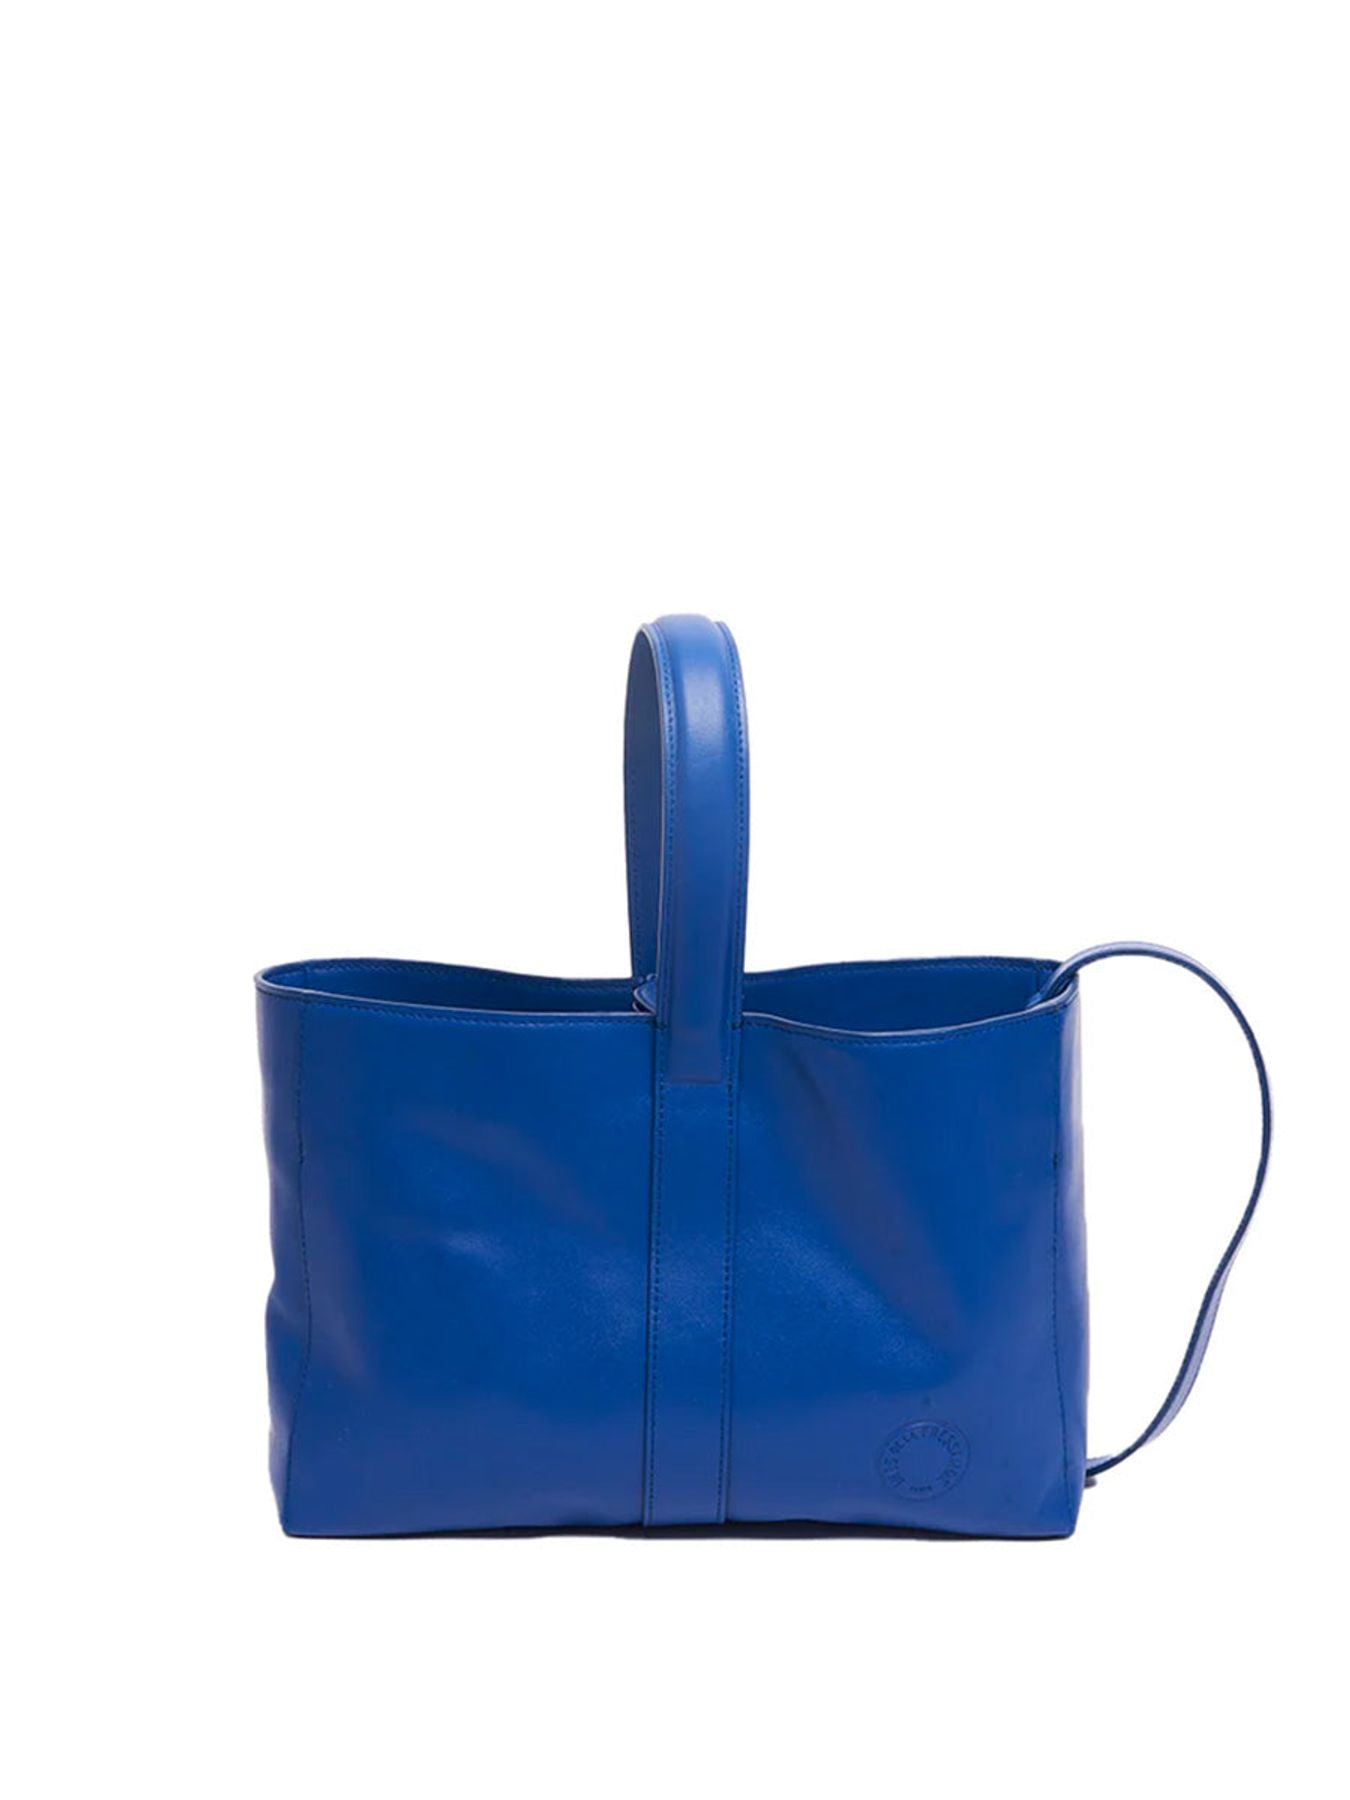 bag-bag-leather-leonore-small-format-blue-cobalt